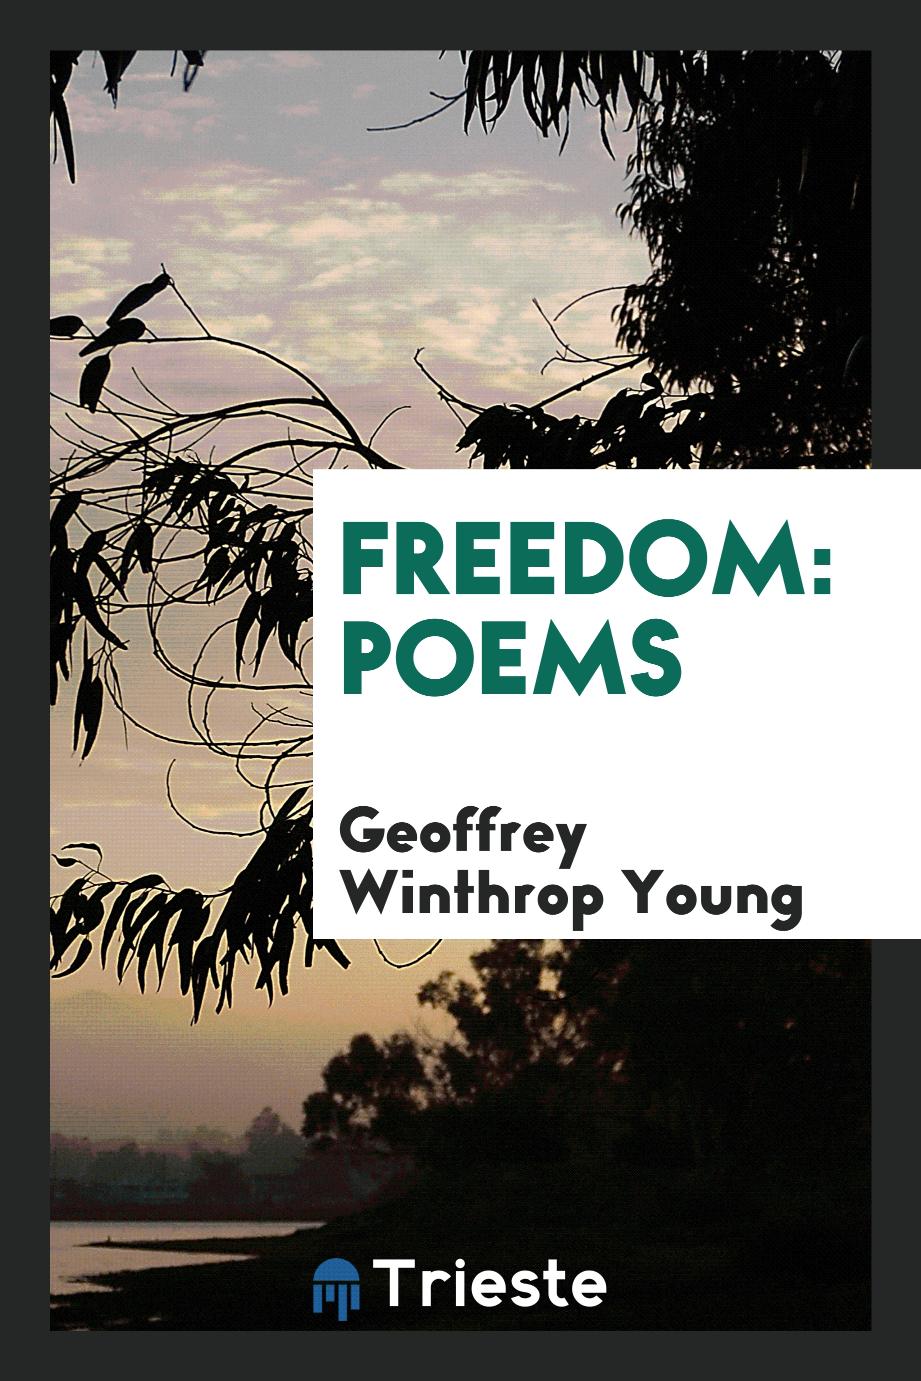 Freedom: poems